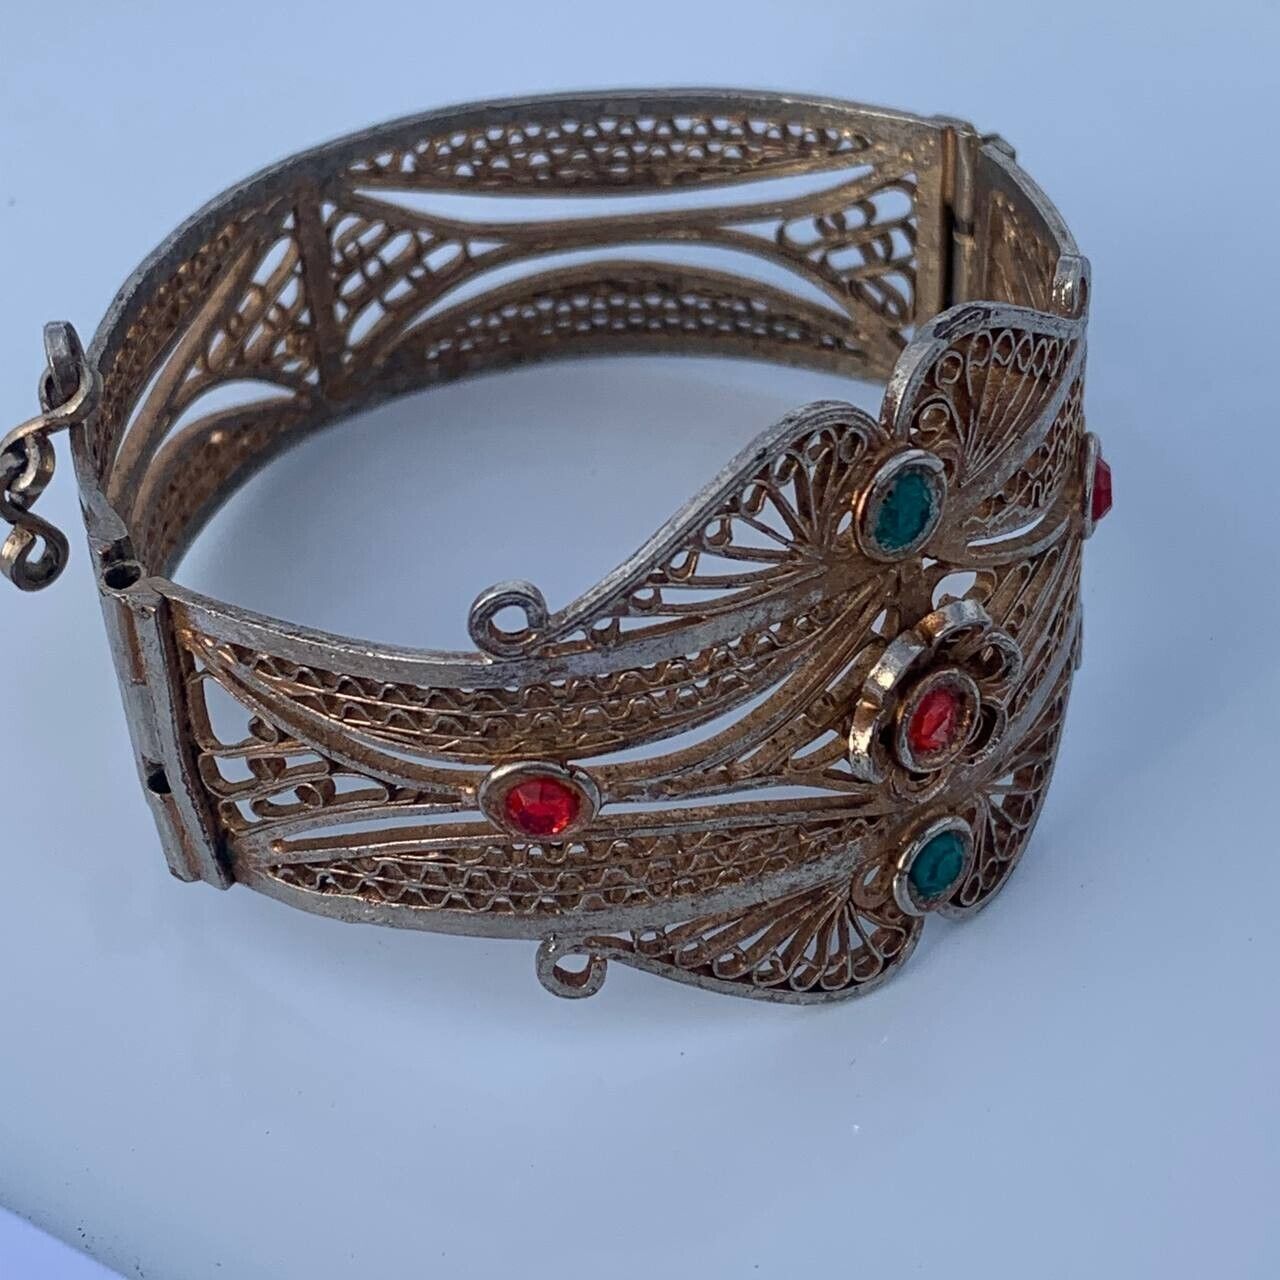 Rare Extremely Ancient Roman Bronze Bracelet Authentic Artifact Amazing